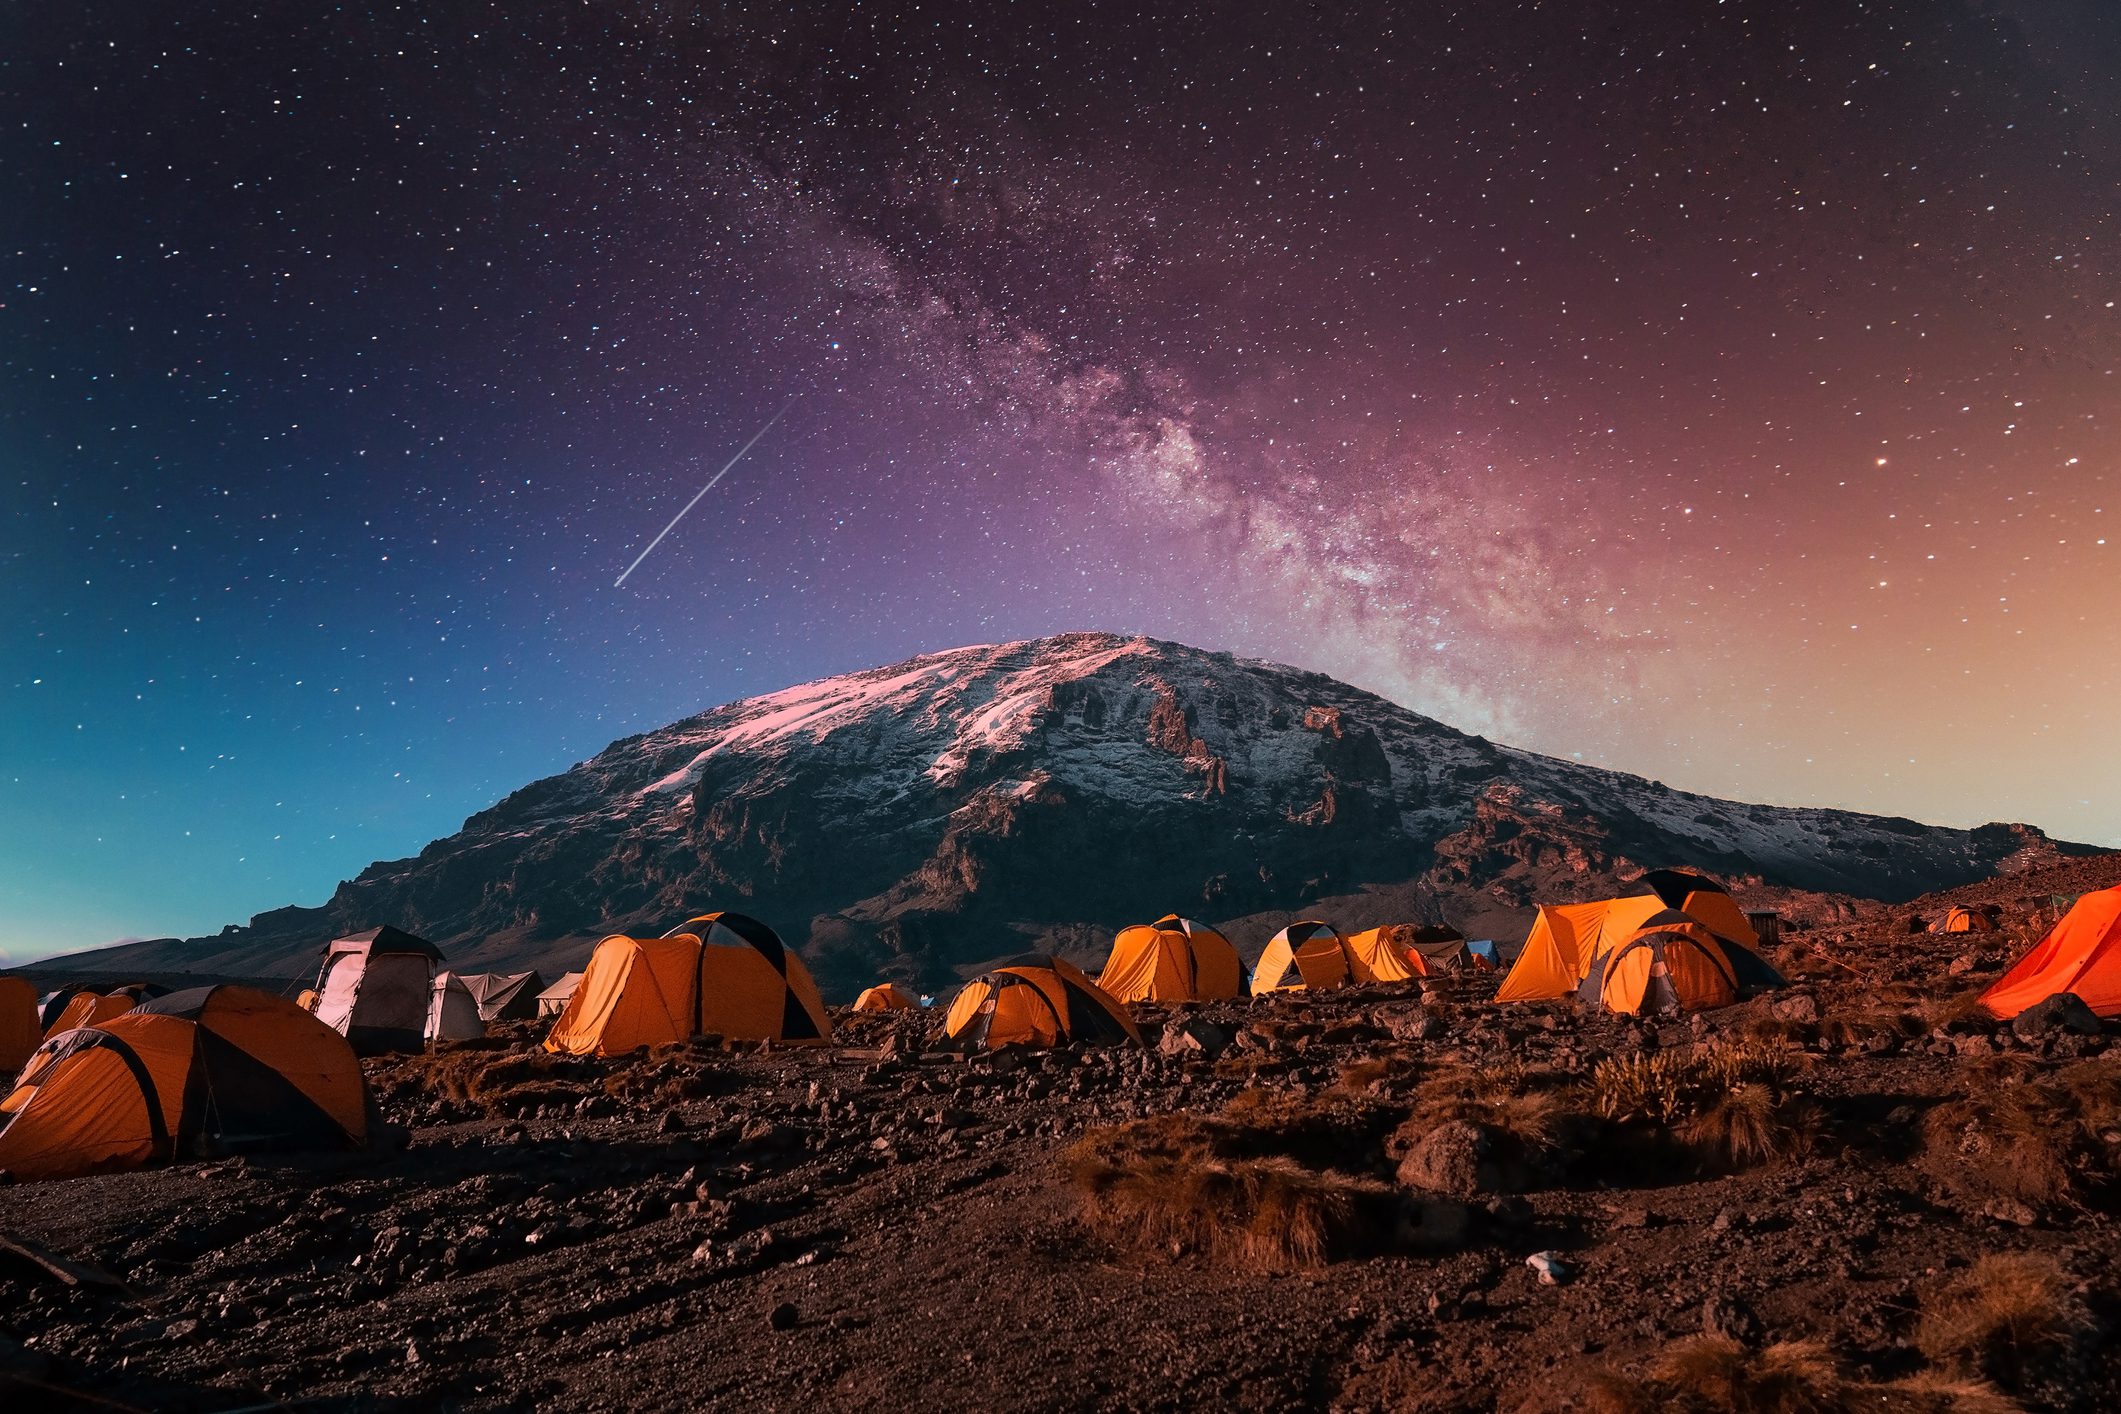 Campsite on Kilimanjaro mountain background under the Milky Way